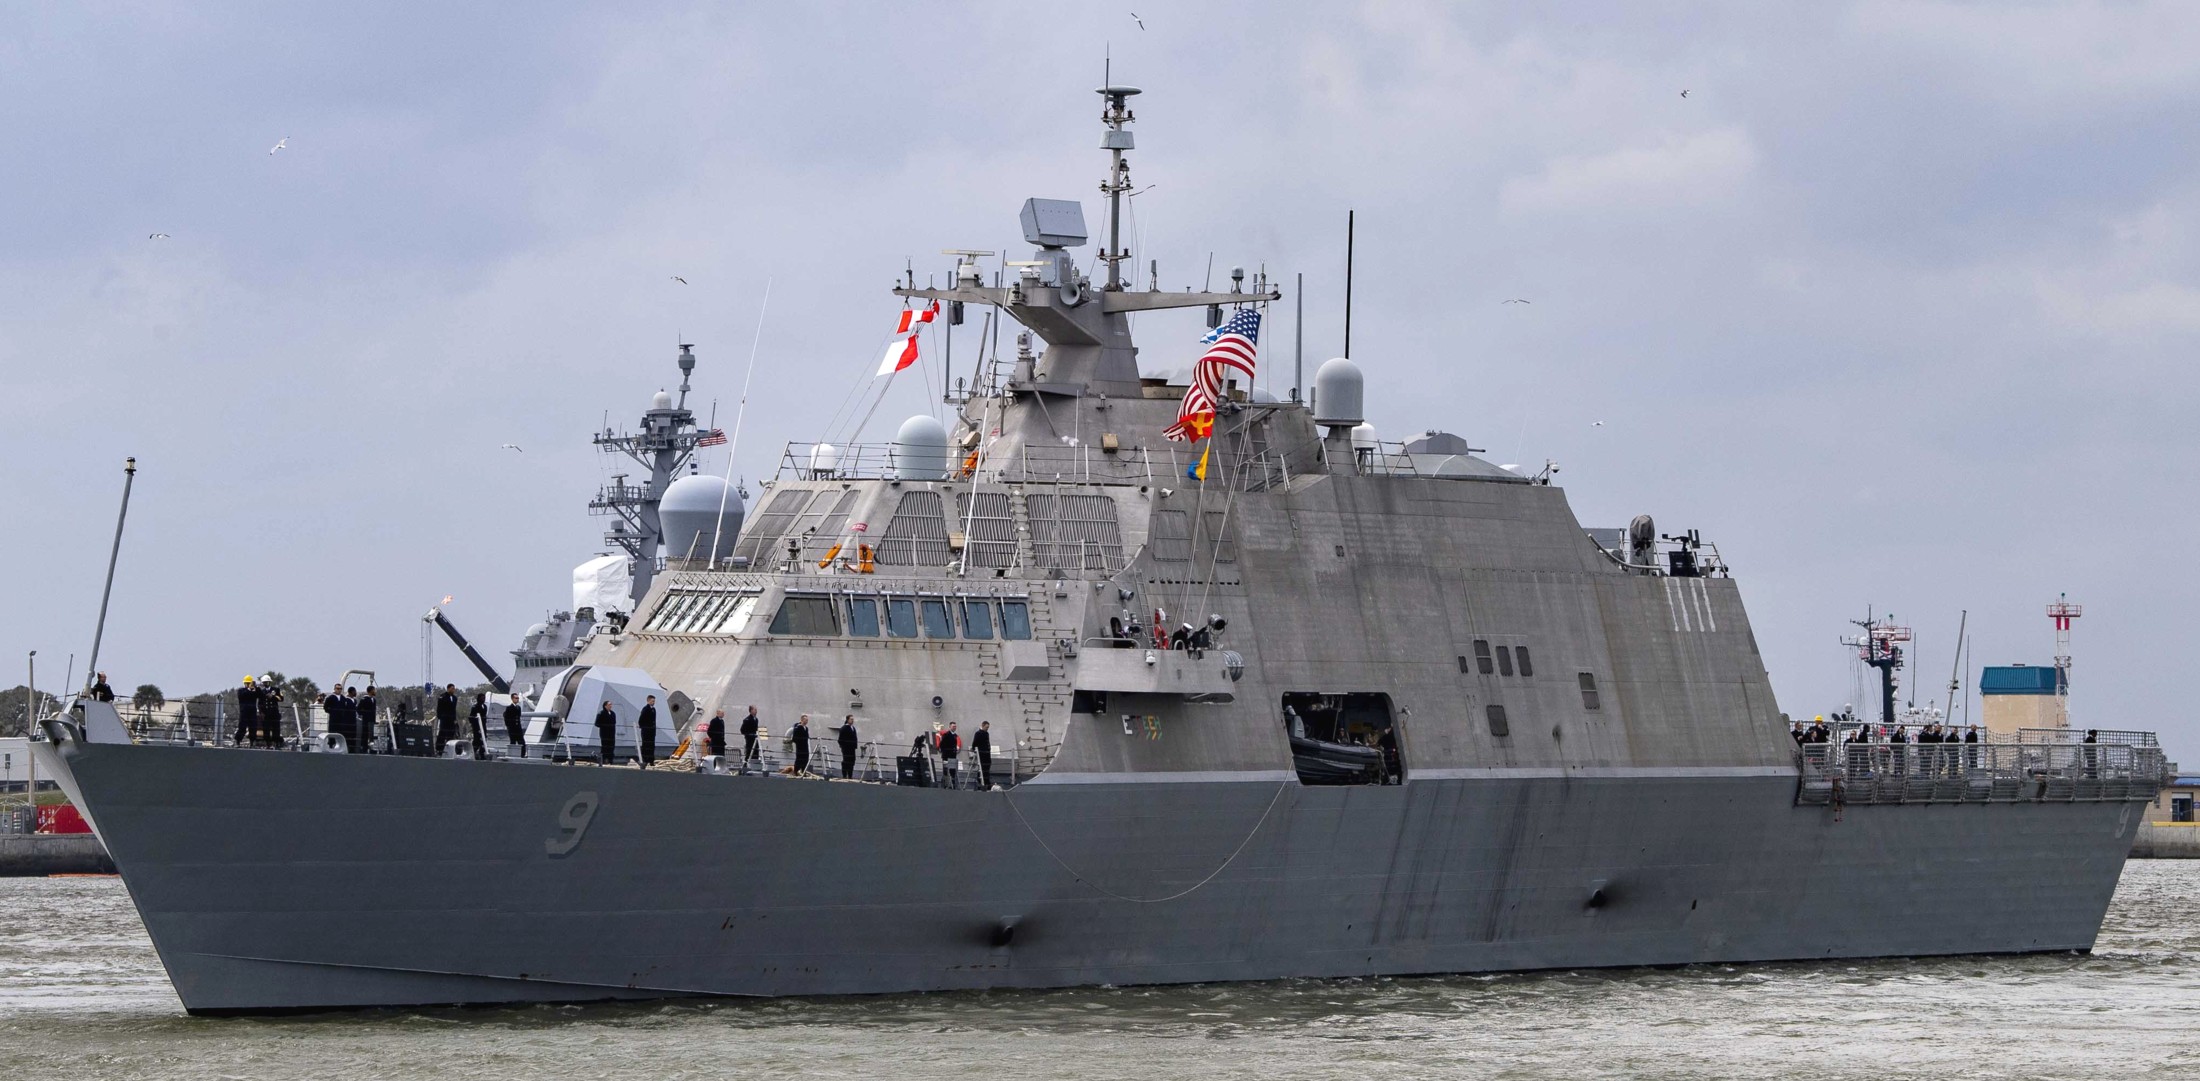 lcs-9 uss little rock freedom class littoral combat ship us navy 28 homeport mayport florida